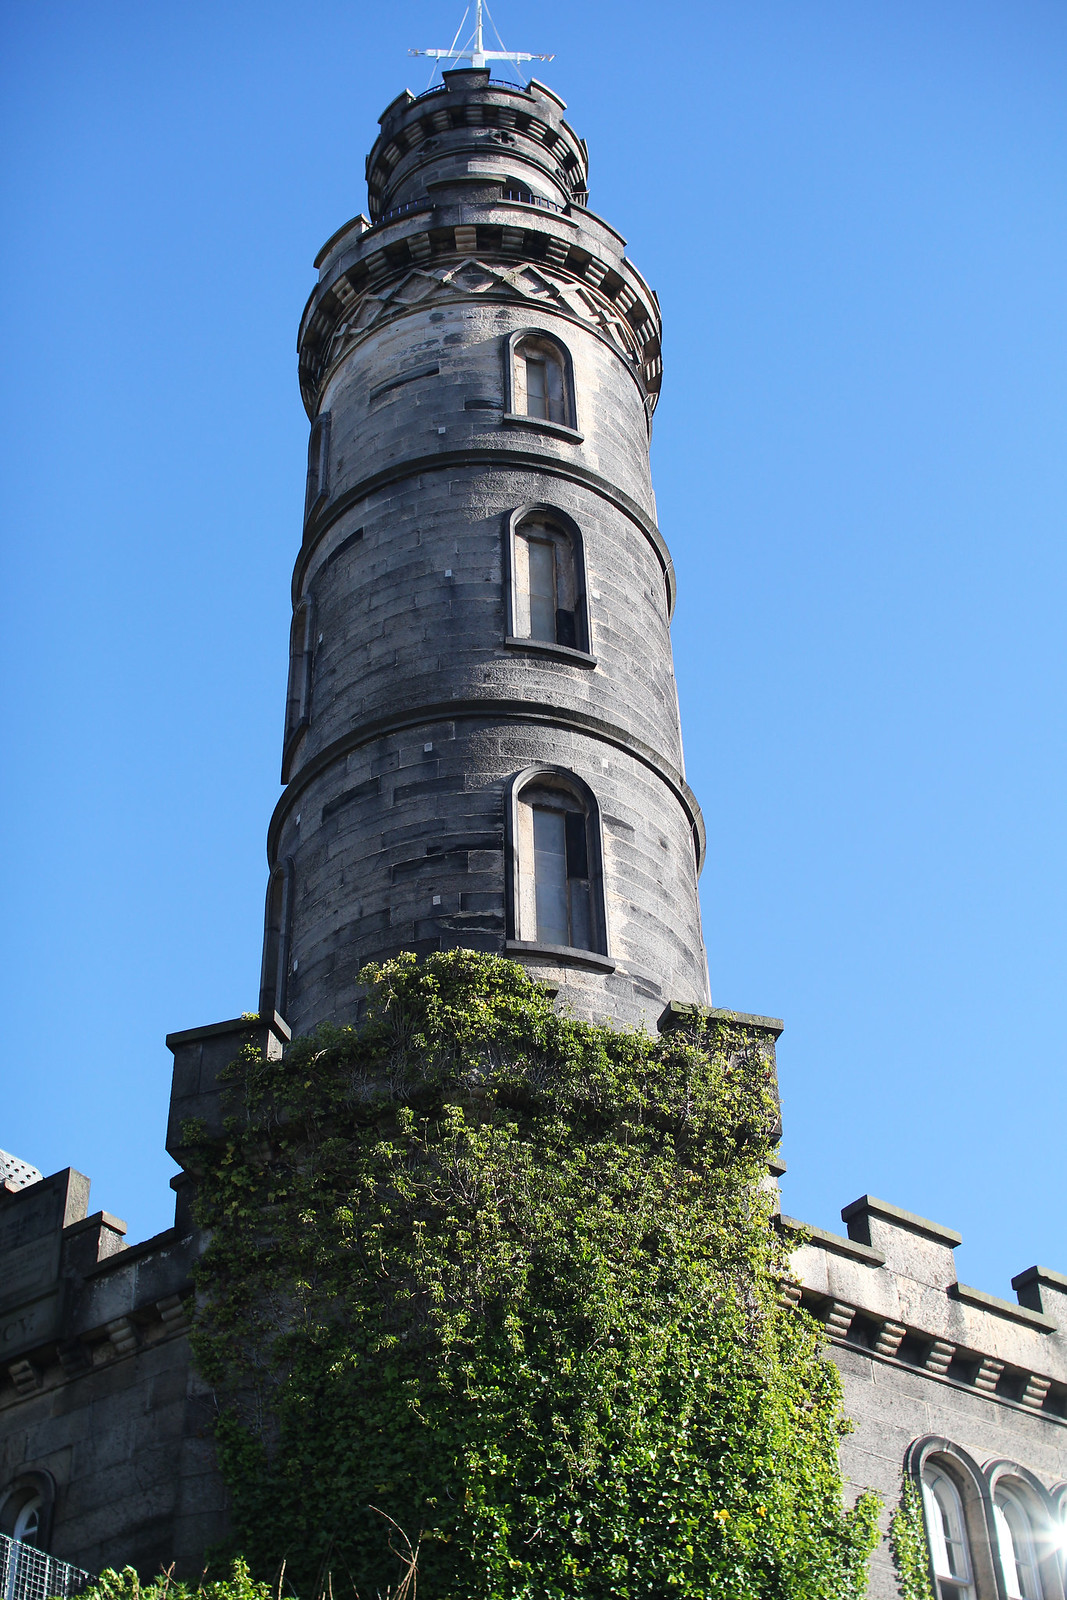 Edinburgh world heritage #edinburgh101 new town tour